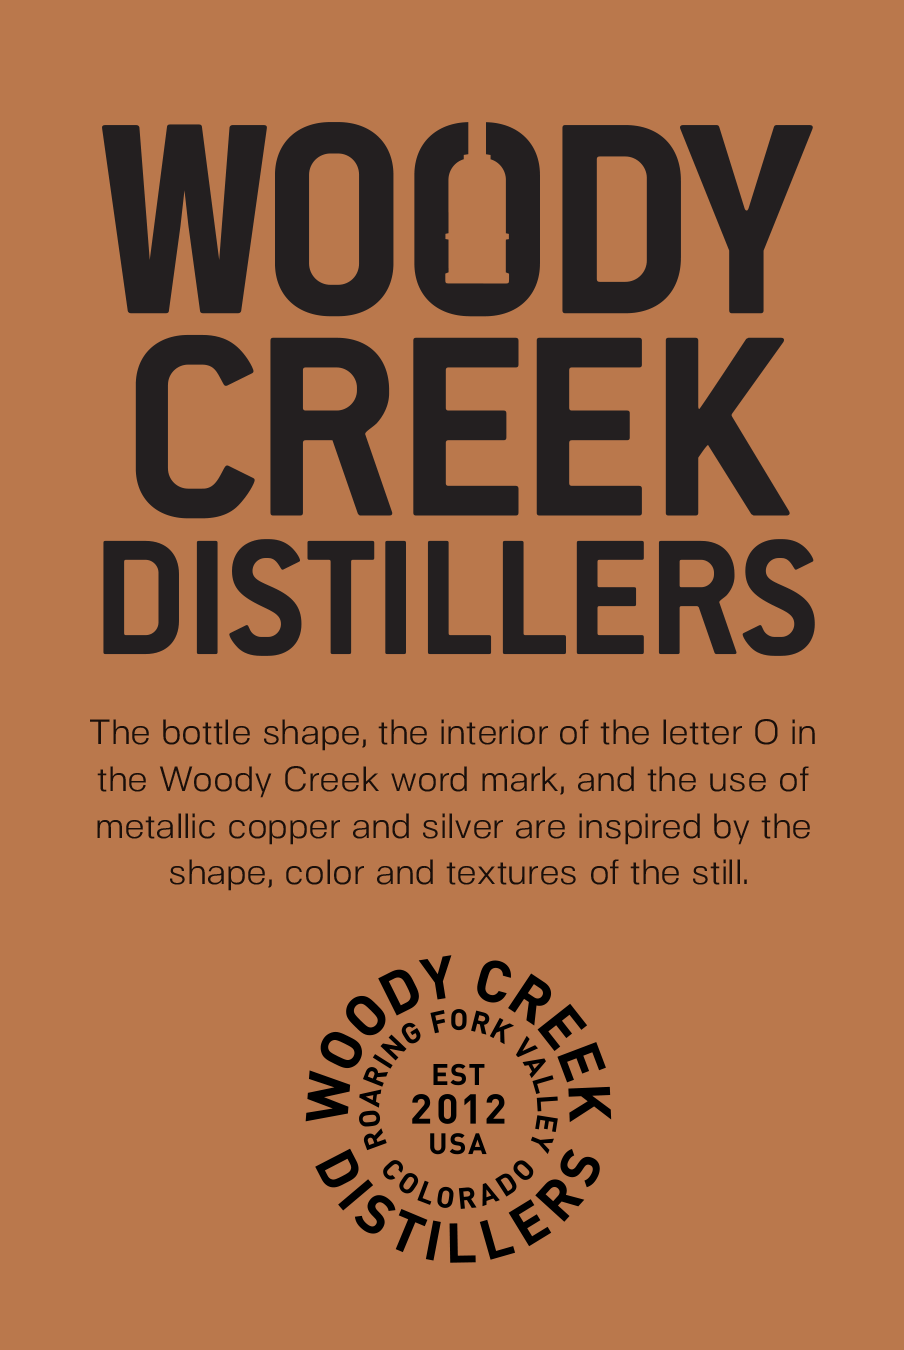 Woody Creek Distillers identity design